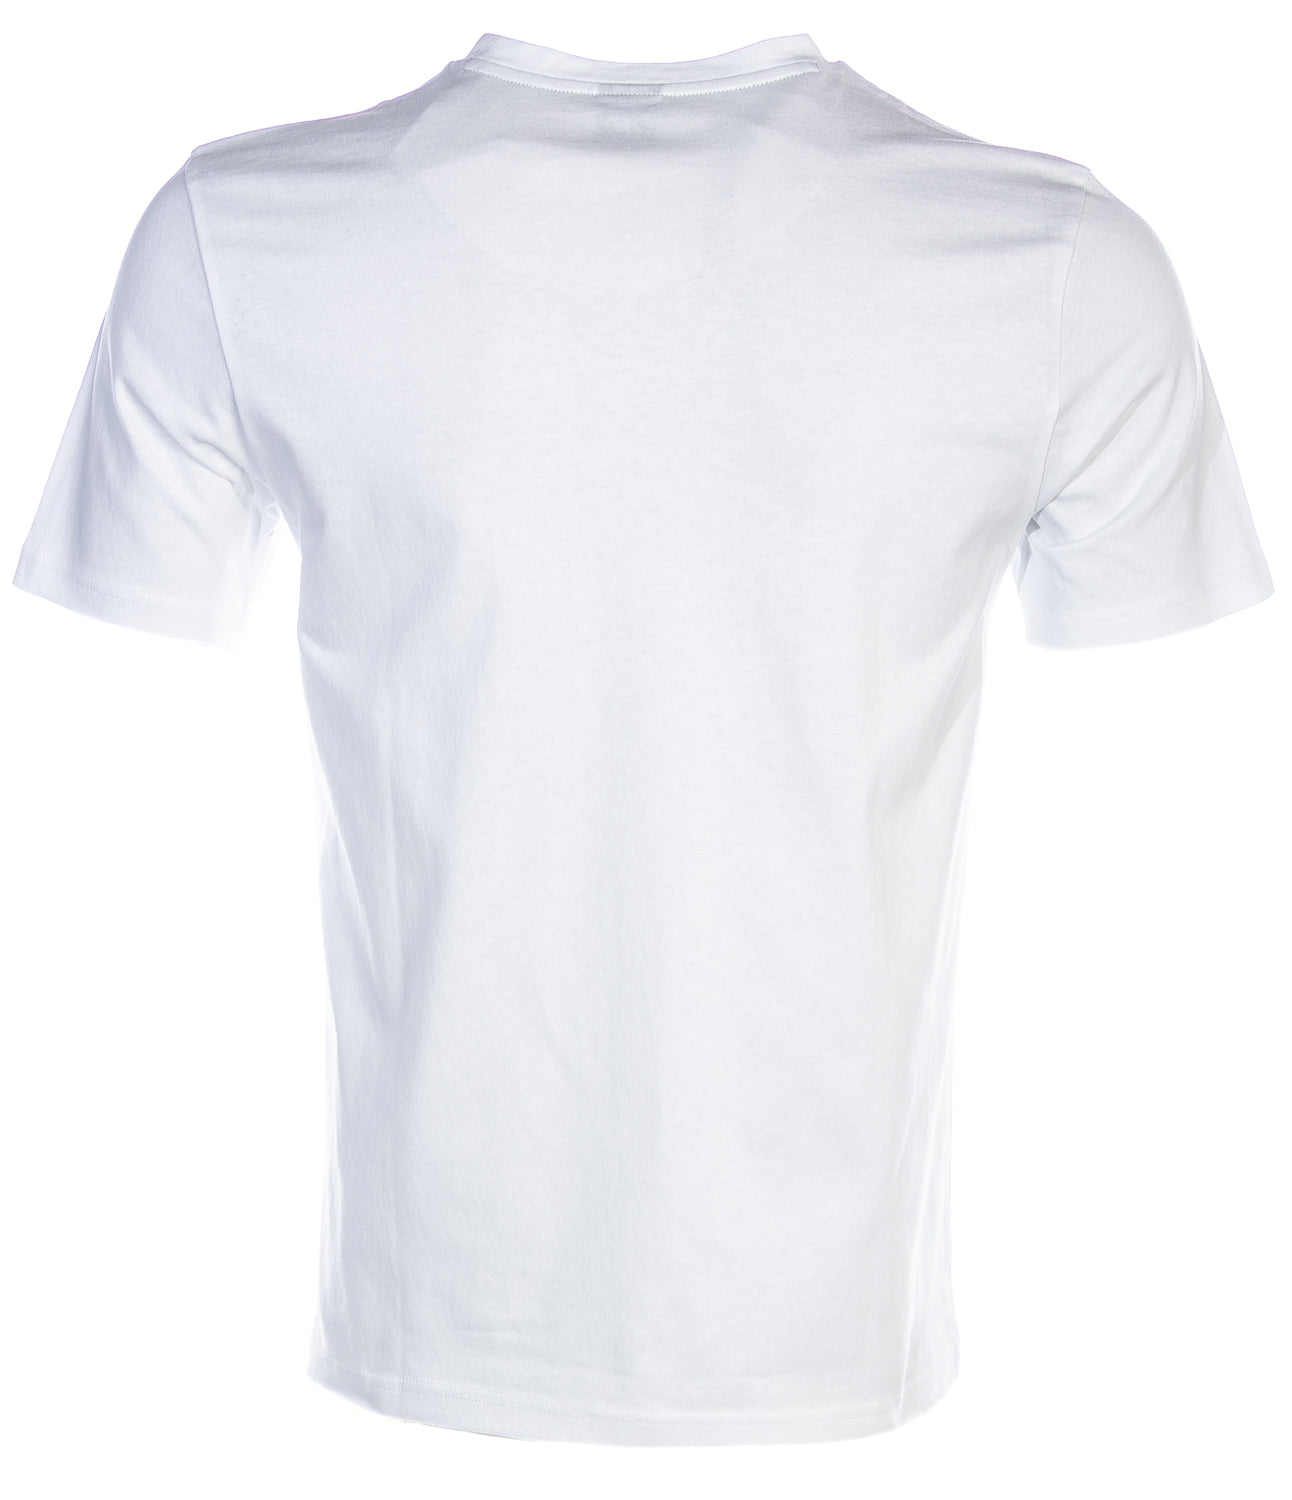 BOSS Troaar 5 T Shirt in White Safari Sunset